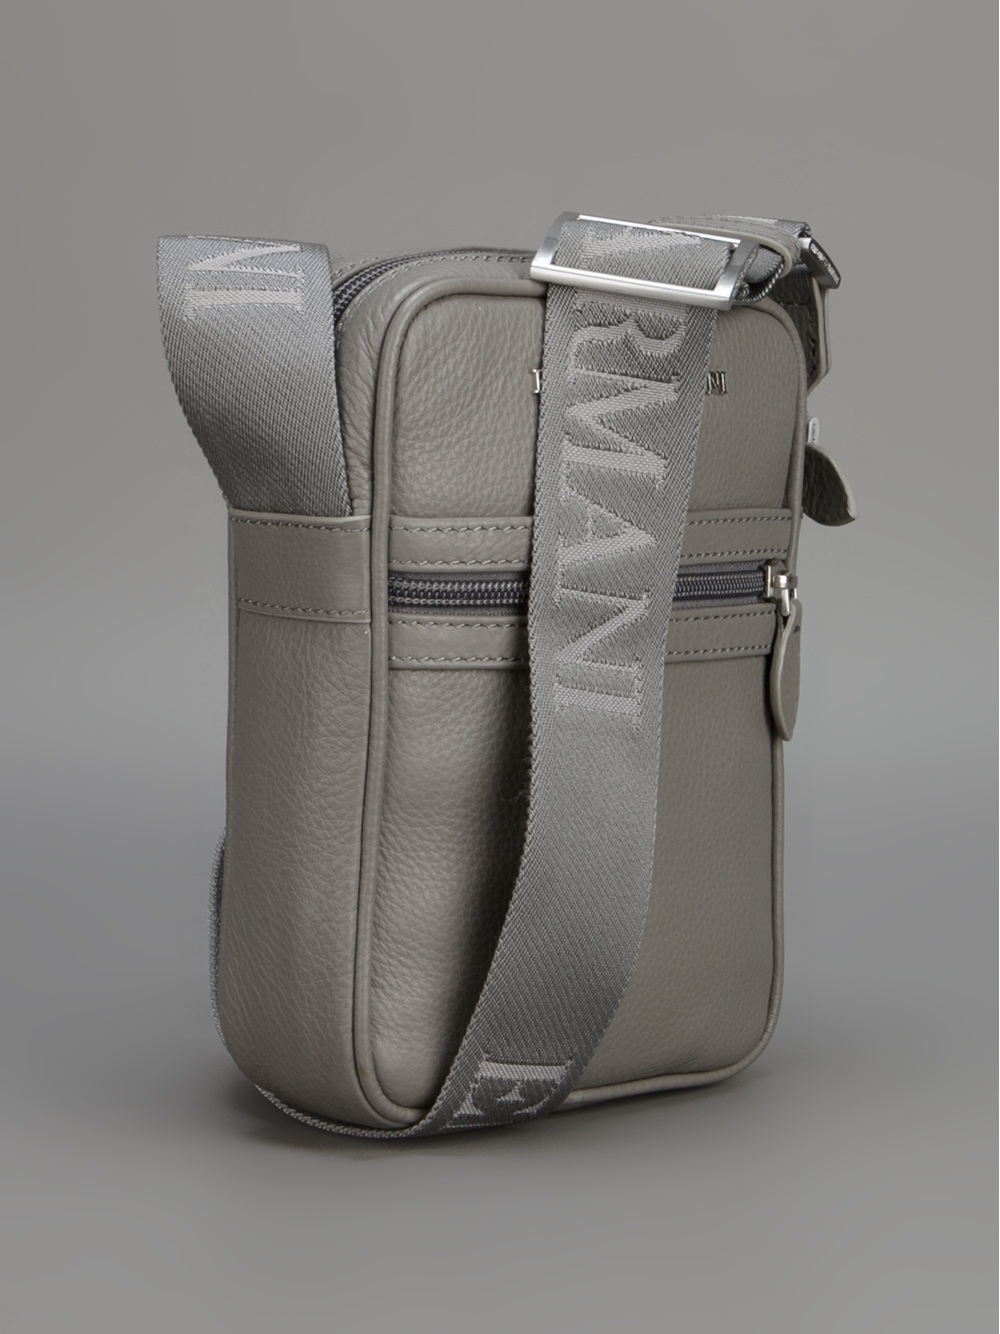 Lyst - Emporio Armani Crossbody Bag in Gray for Men